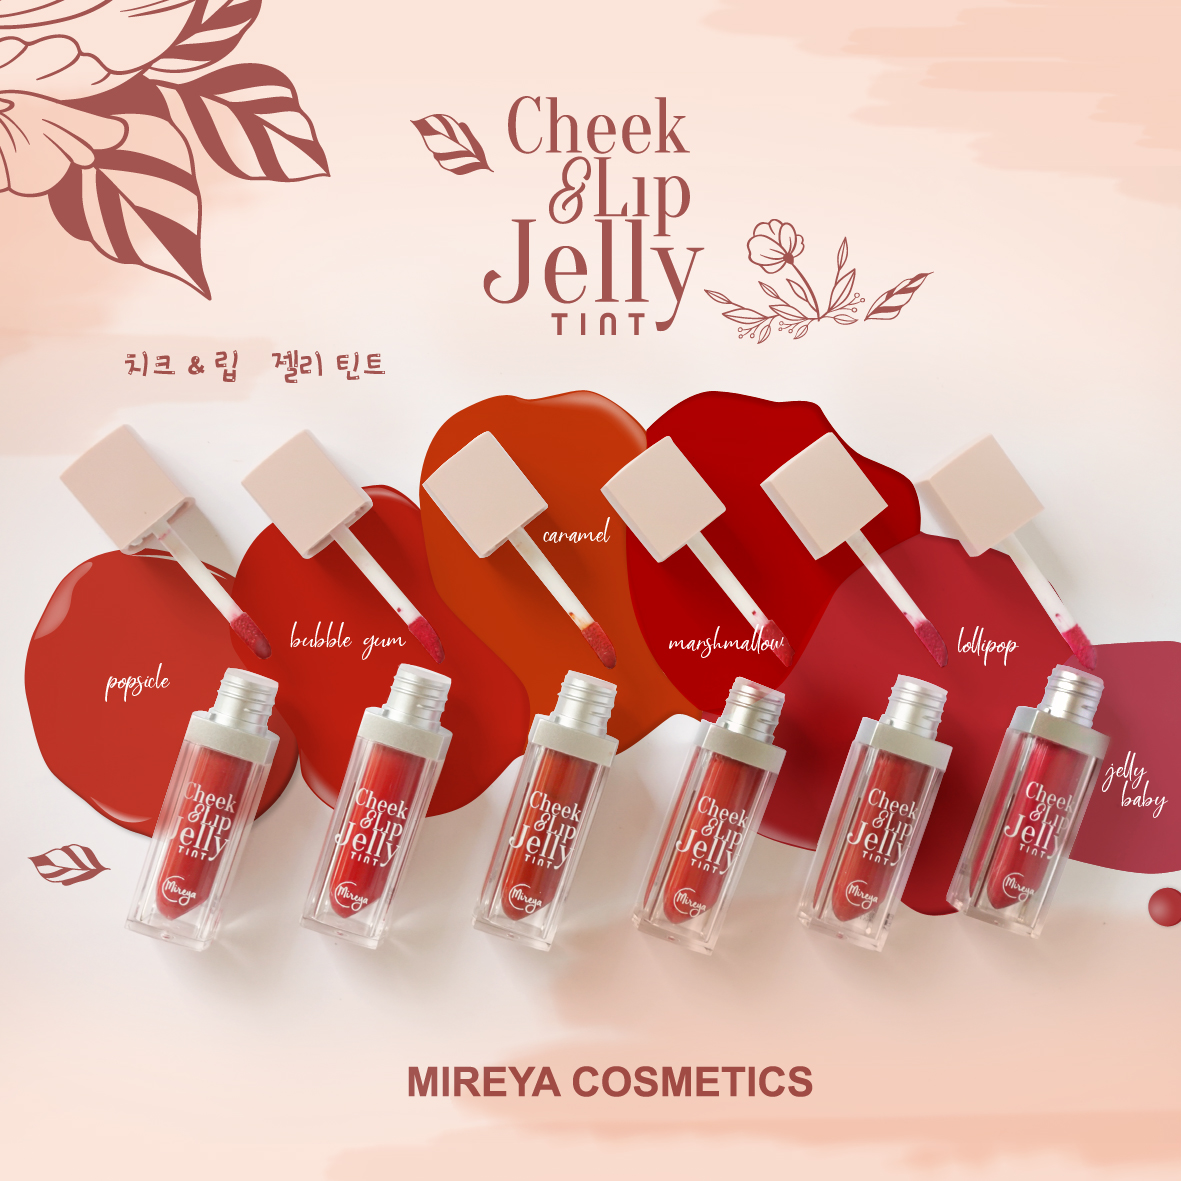 Mireya Lip & Check Jellytint image